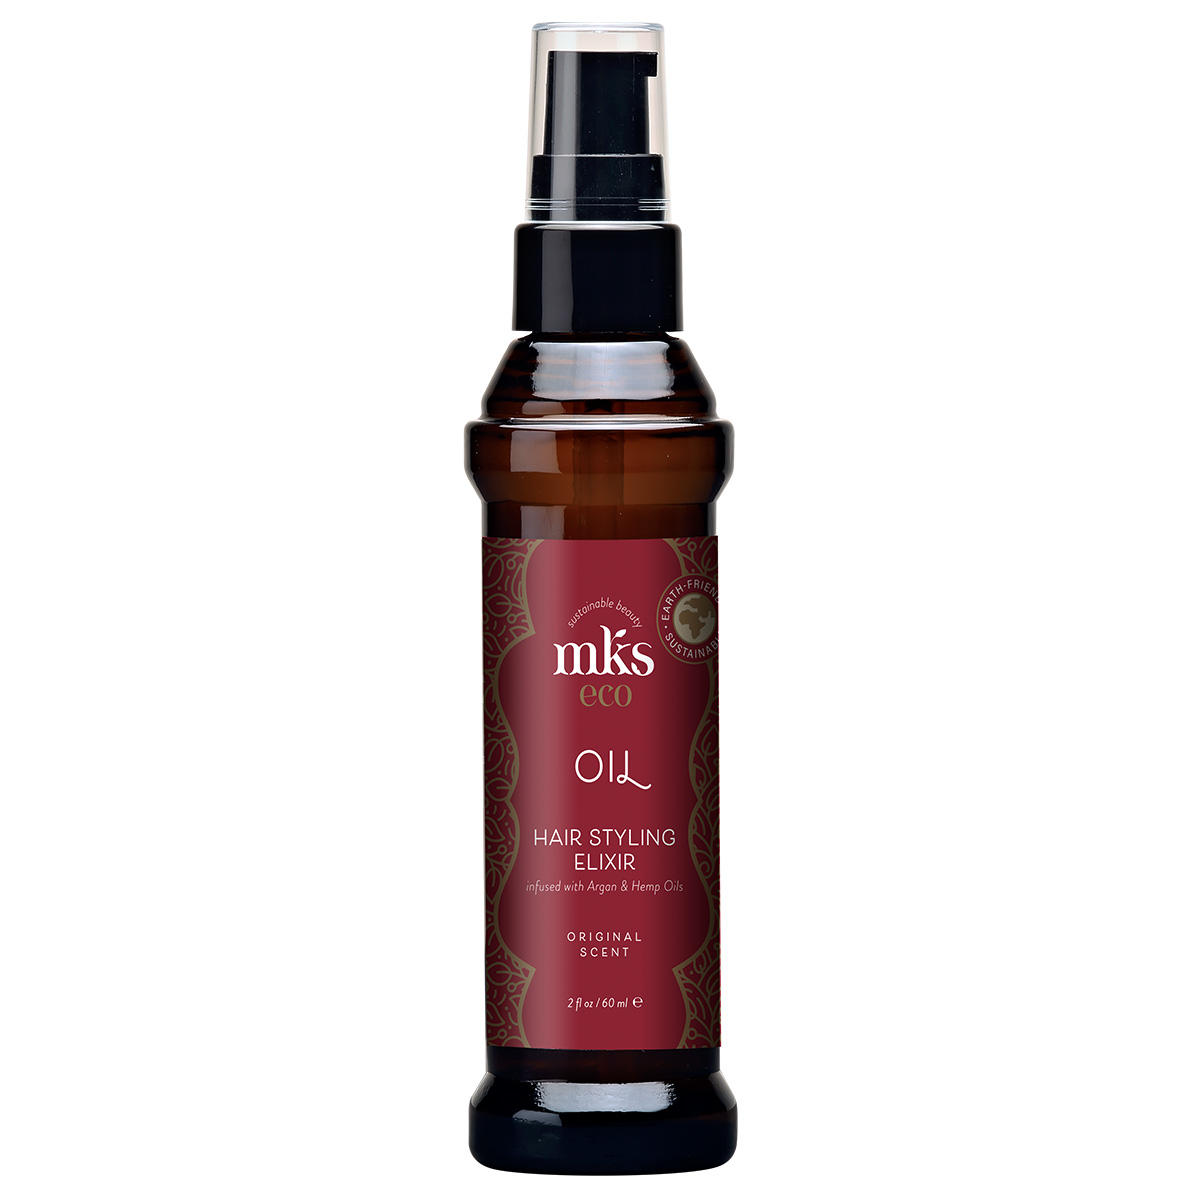 mks eco Hair Styling Elixir Classic Oil  60 ml - 1